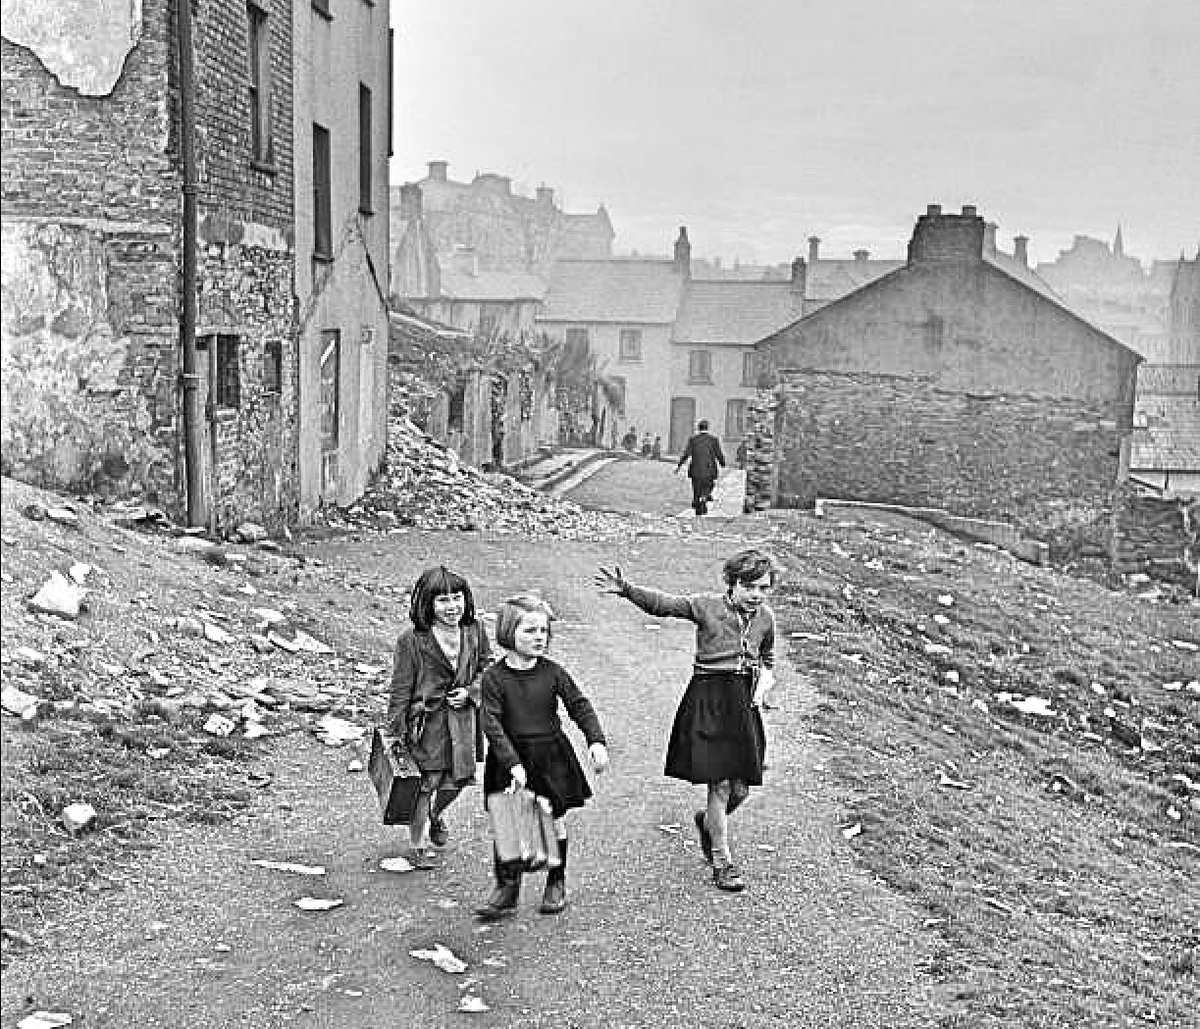 Derry / Londonderry. 1955.
(B Hardy / Getty)